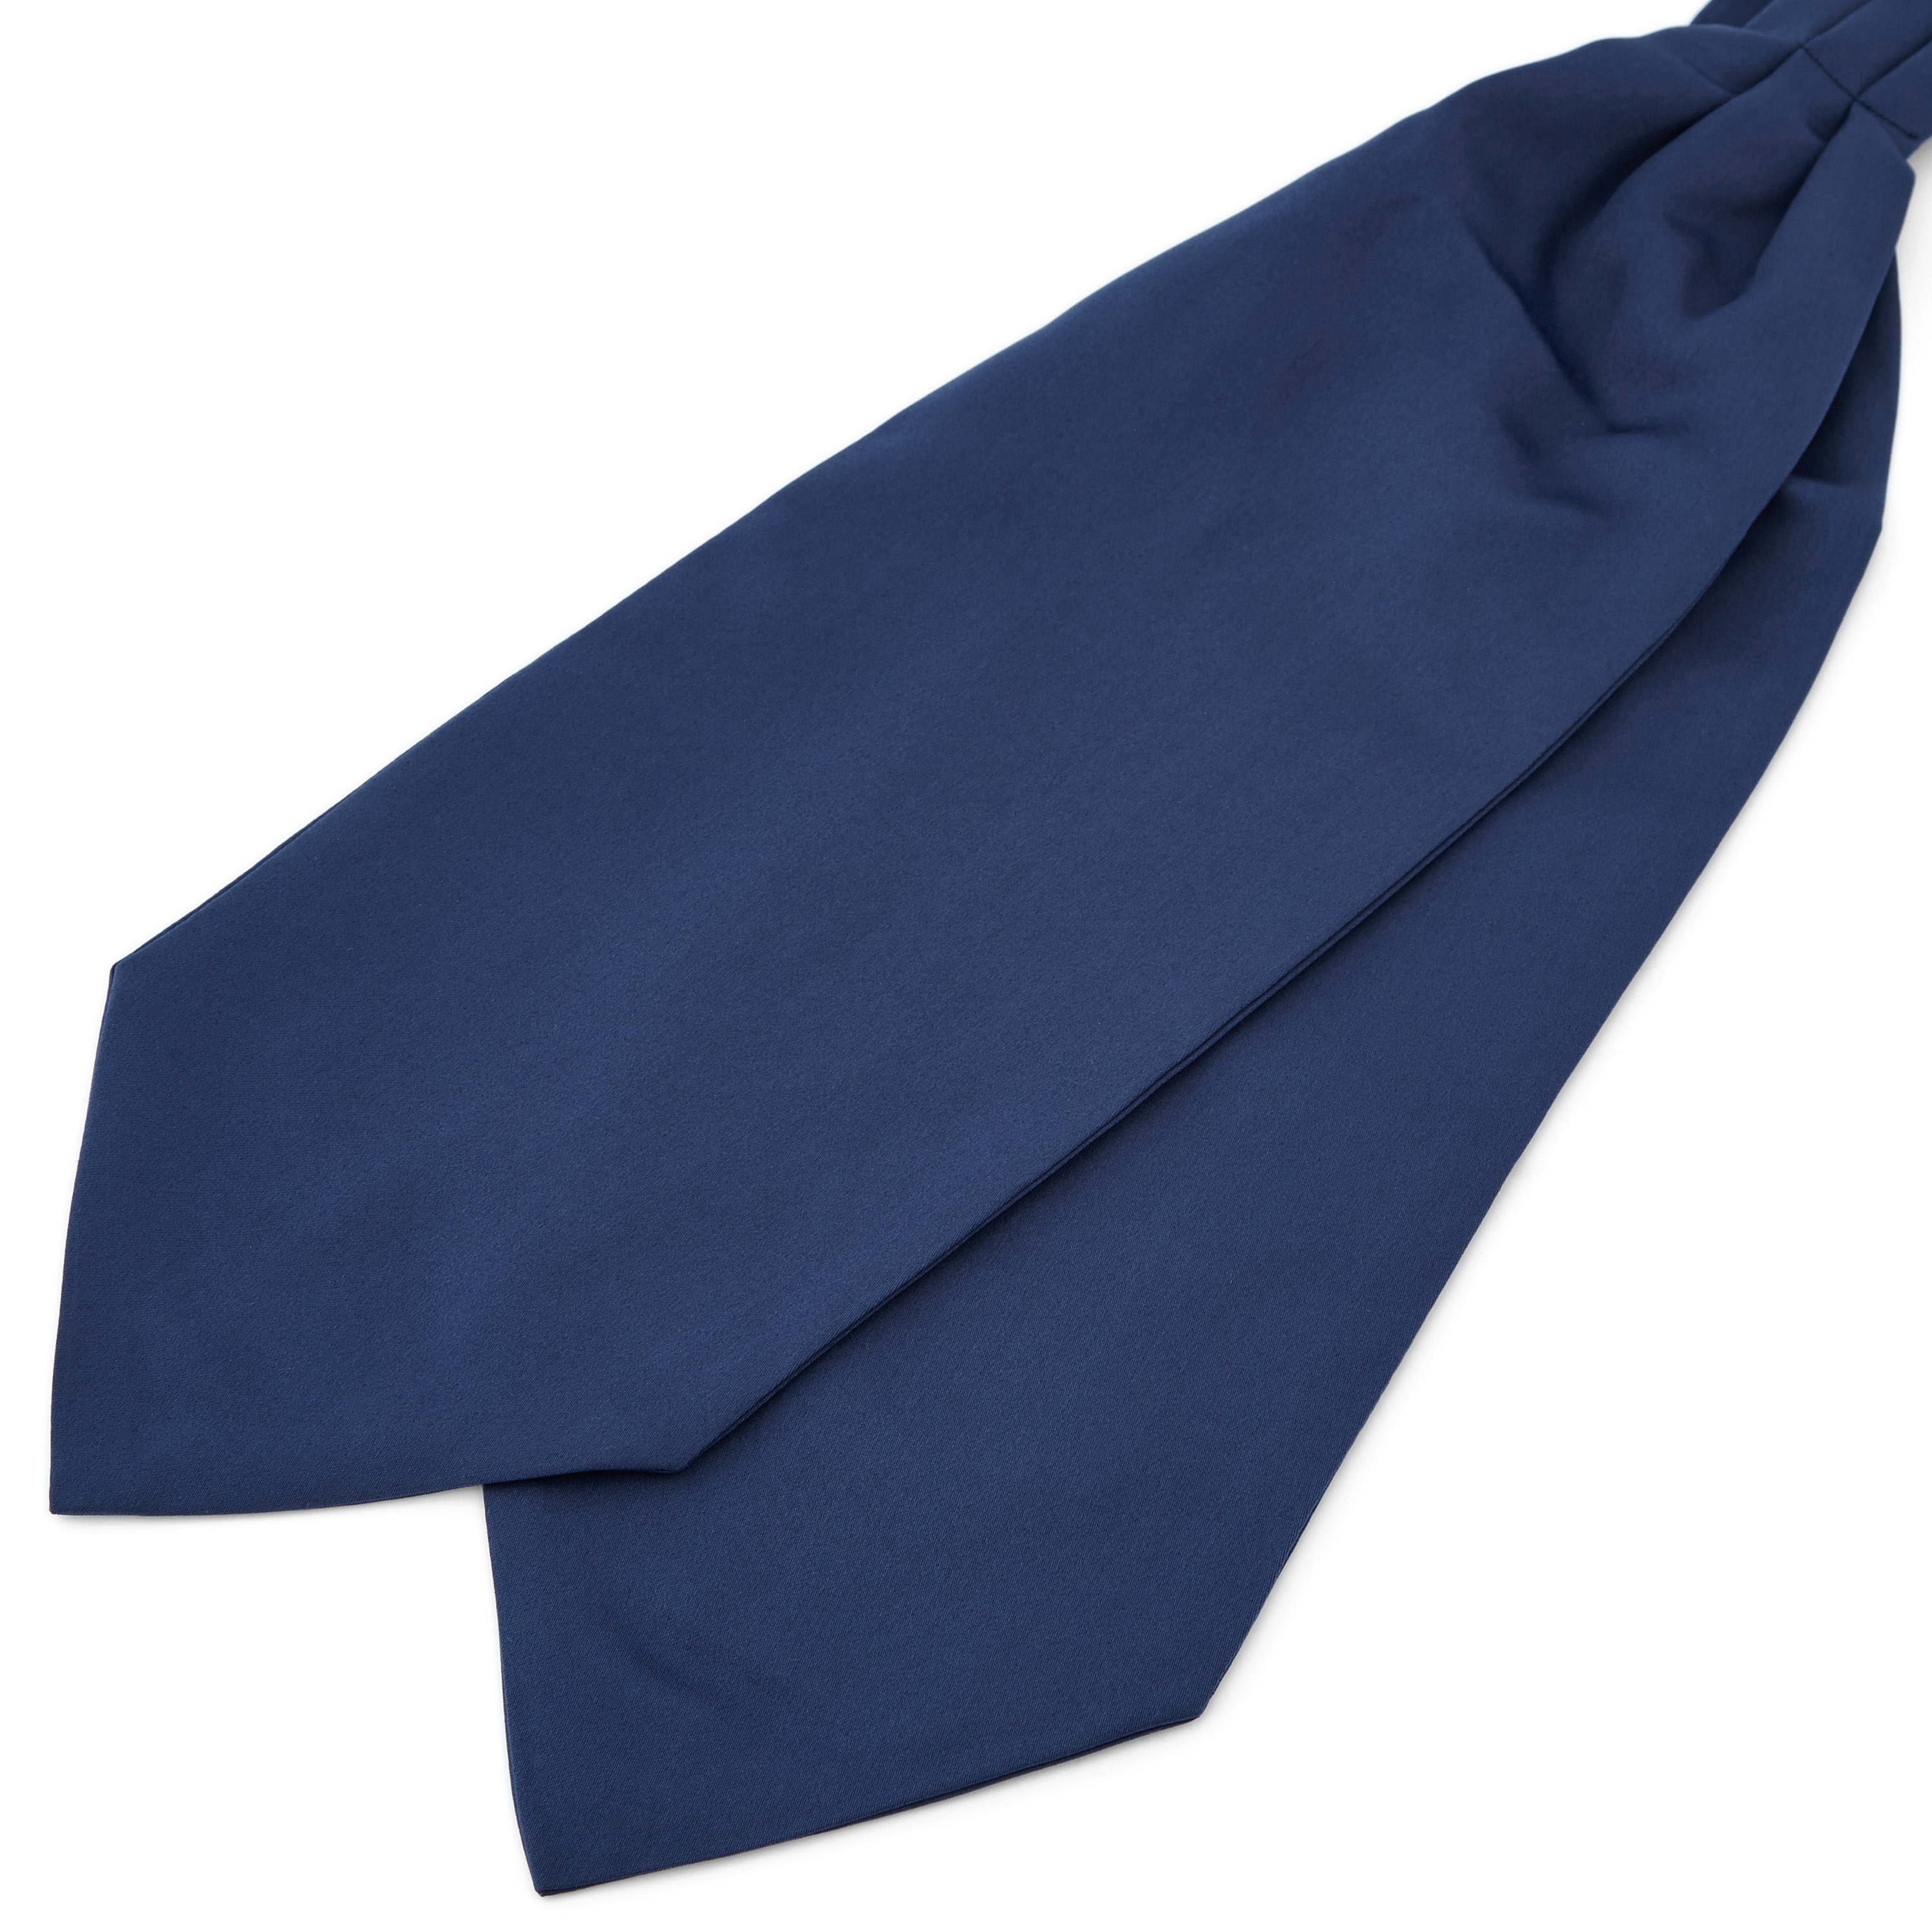 ZOYLINK Homme Vintage Cravate Creative Foulards Cravates Cravates Ascot Cravates Avec Poche Carré 